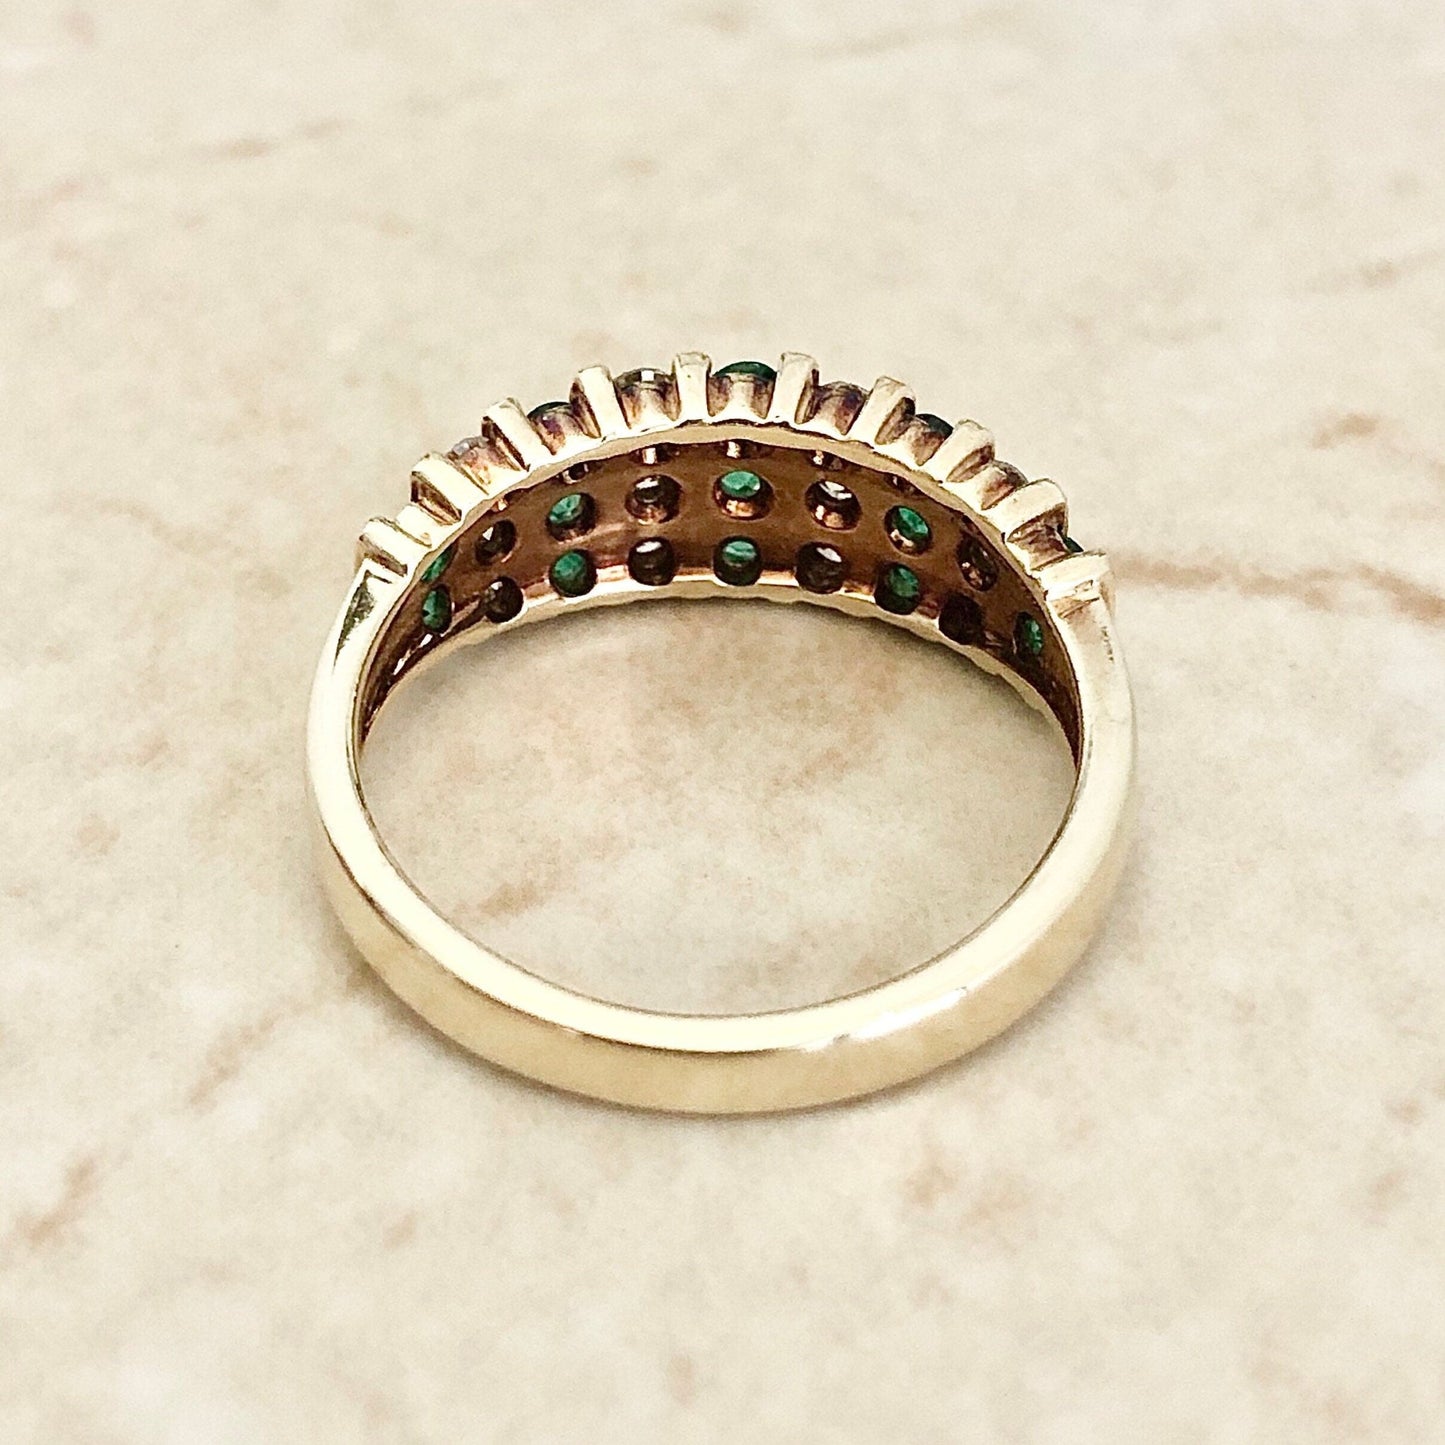 Vintage Natural Emerald & Diamond Cocktail Ring - 14K Yellow Gold - Genuine Gemstone - Size 6.75 - Avril May Birthstone - Birthday Gift